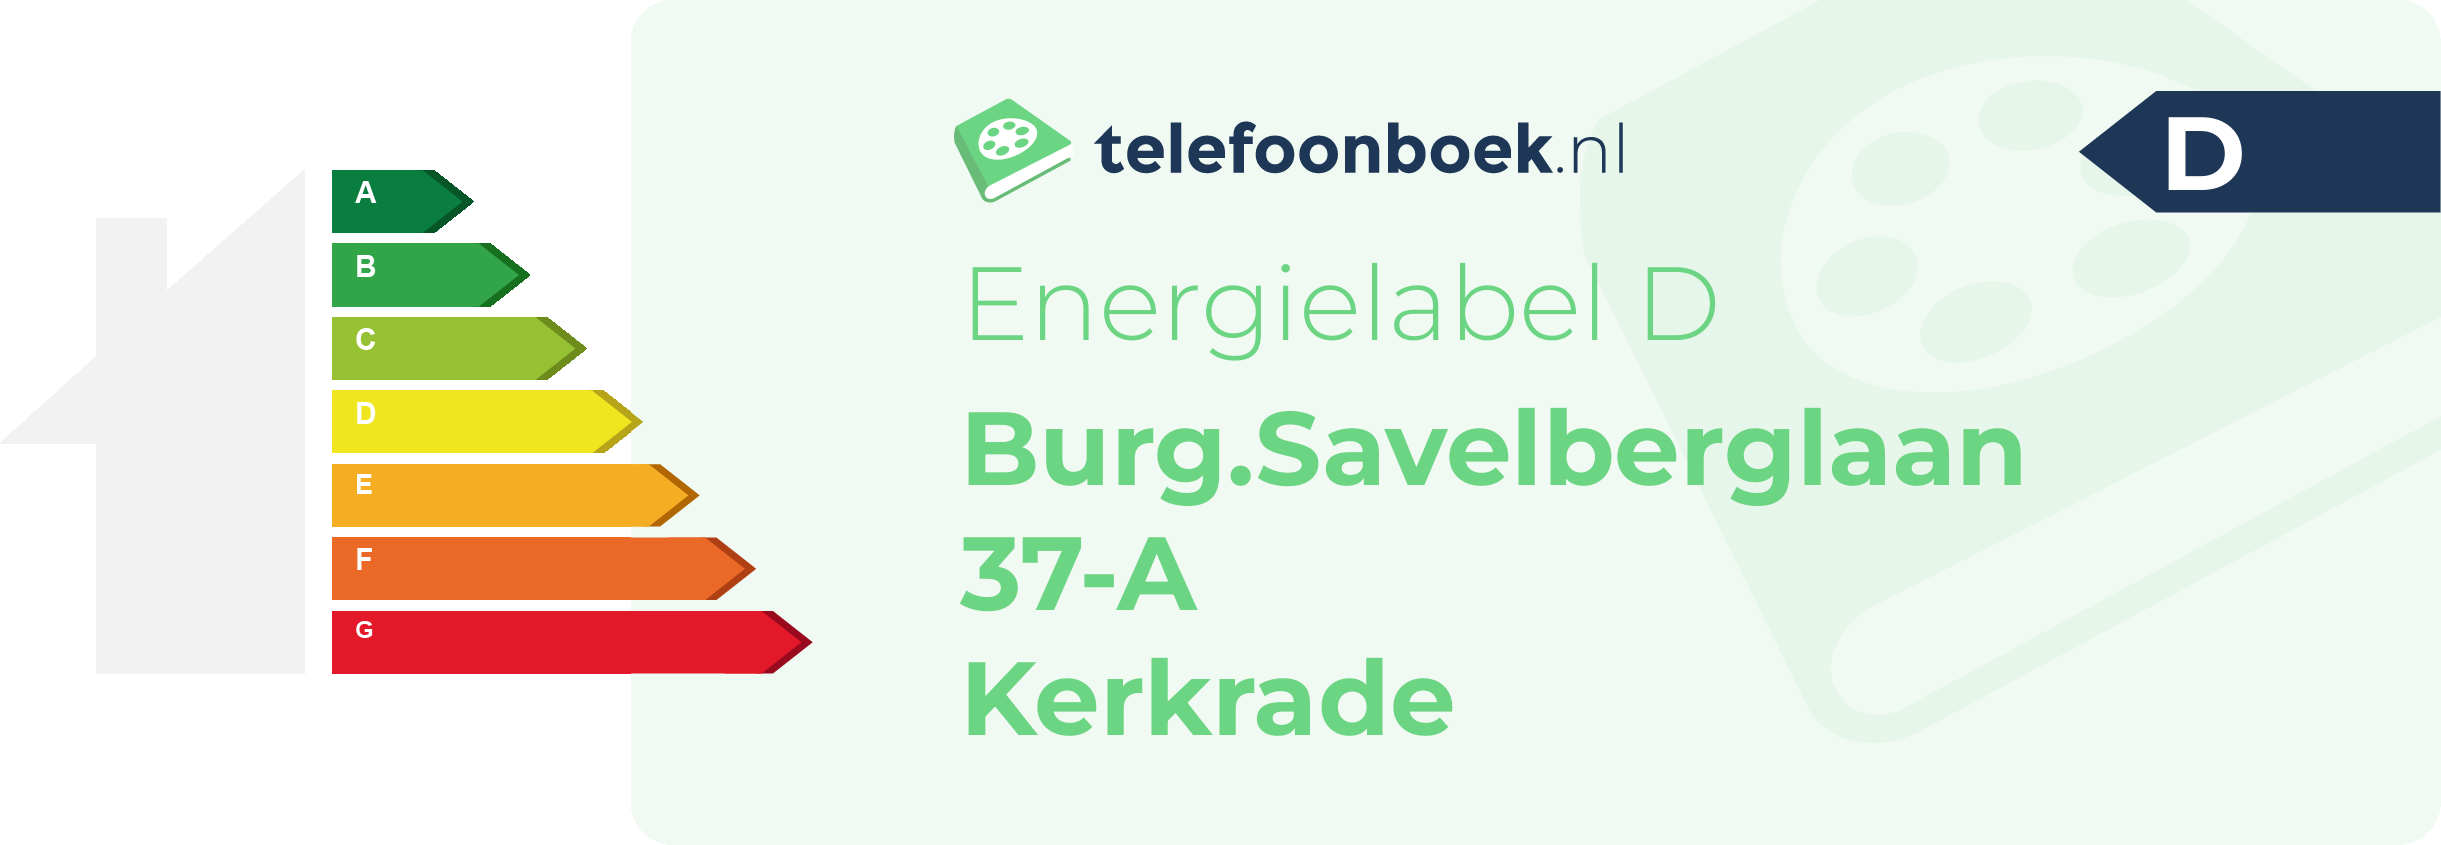 Energielabel Burg.Savelberglaan 37-A Kerkrade